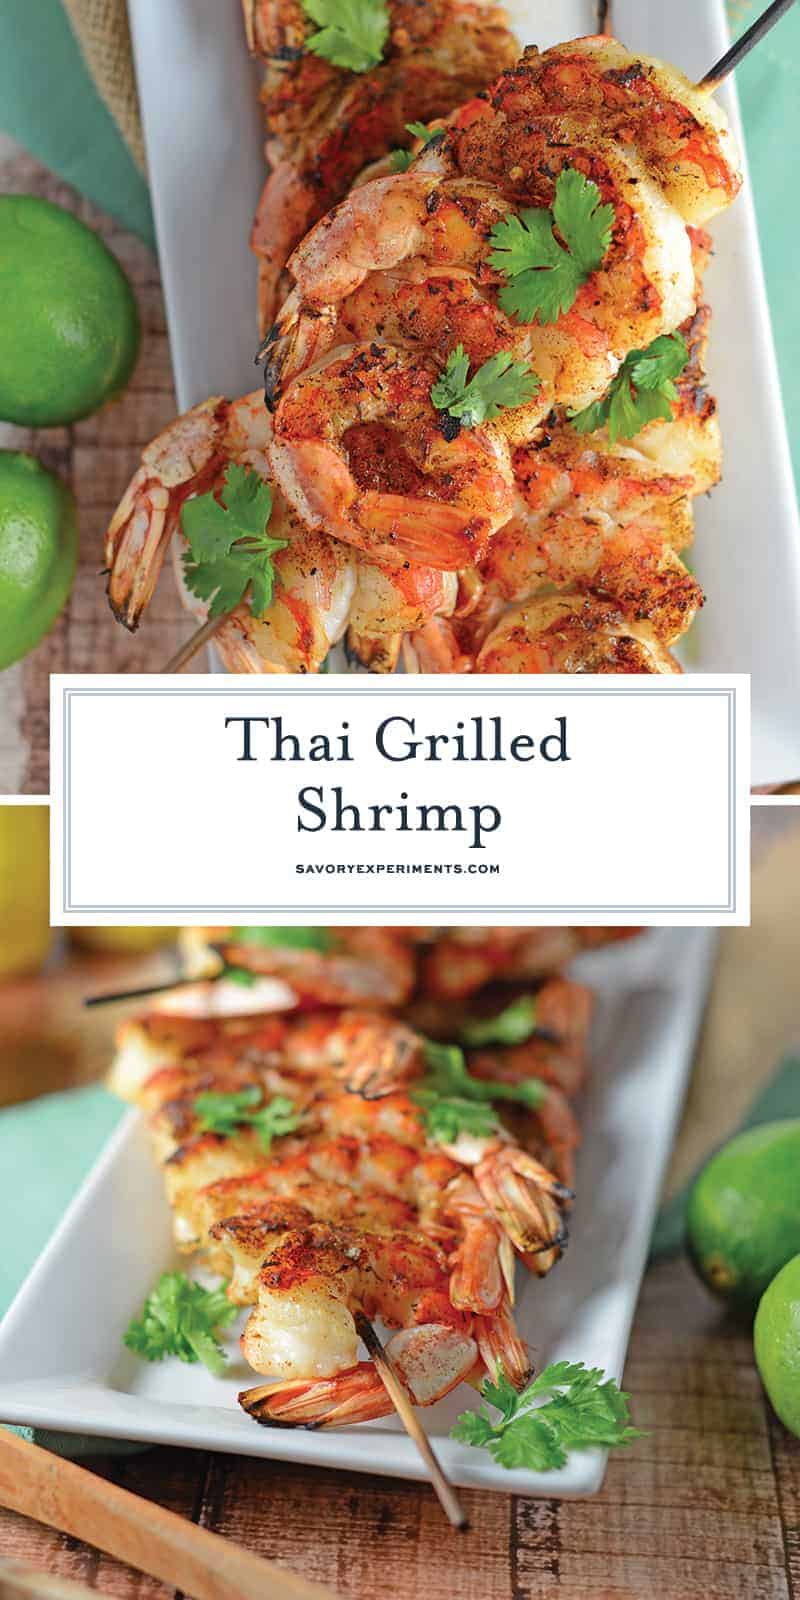 https://www.savoryexperiments.com/wp-content/uploads/2016/08/Thai-Grilled-Shrimp-PIN-1.jpg